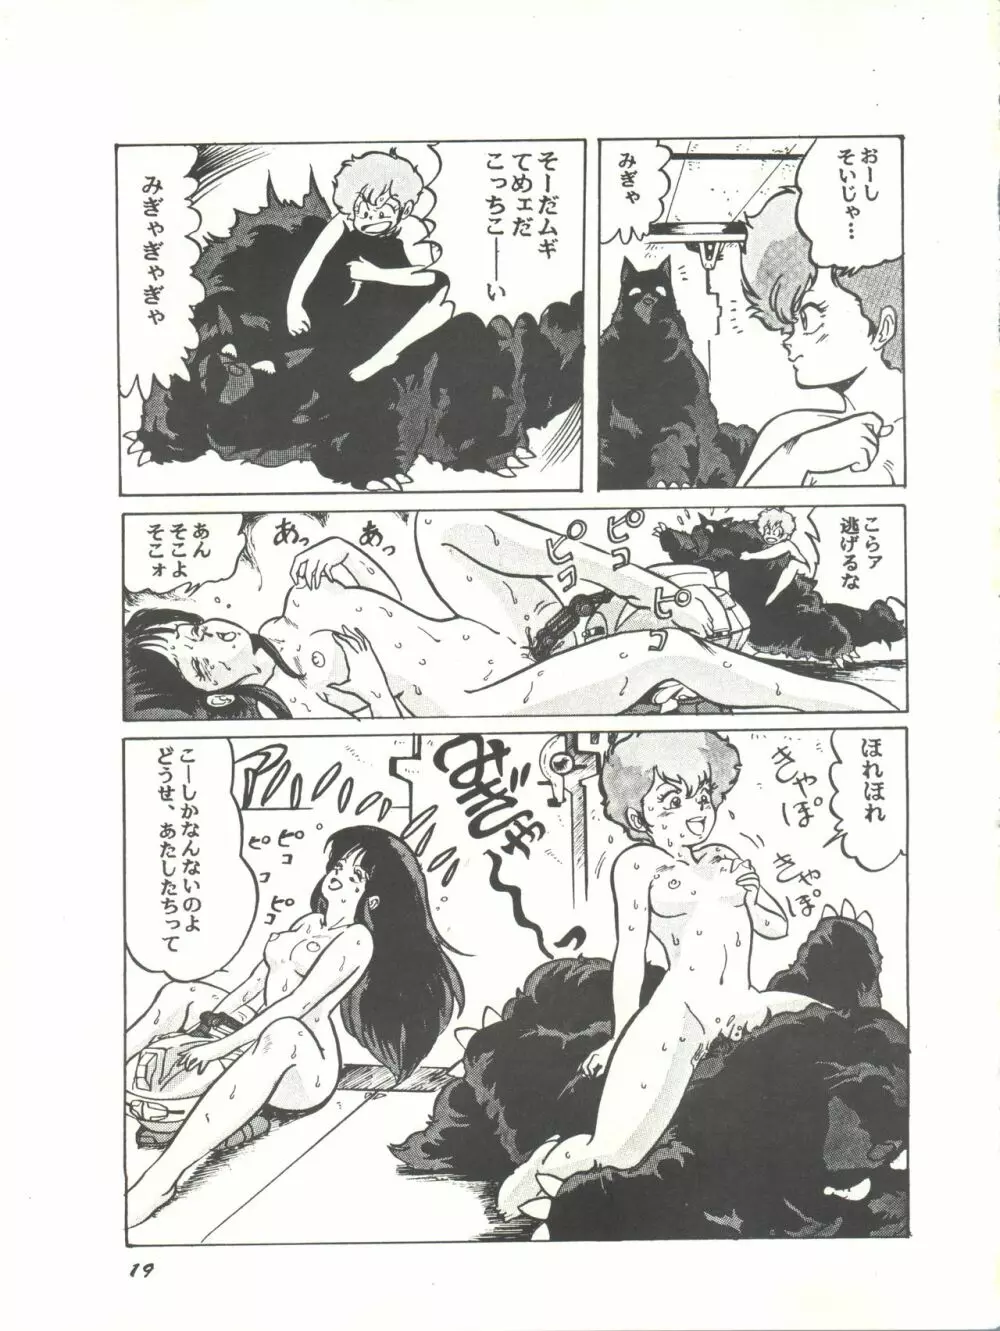 Paろでぃっく2 改訂版 - page19